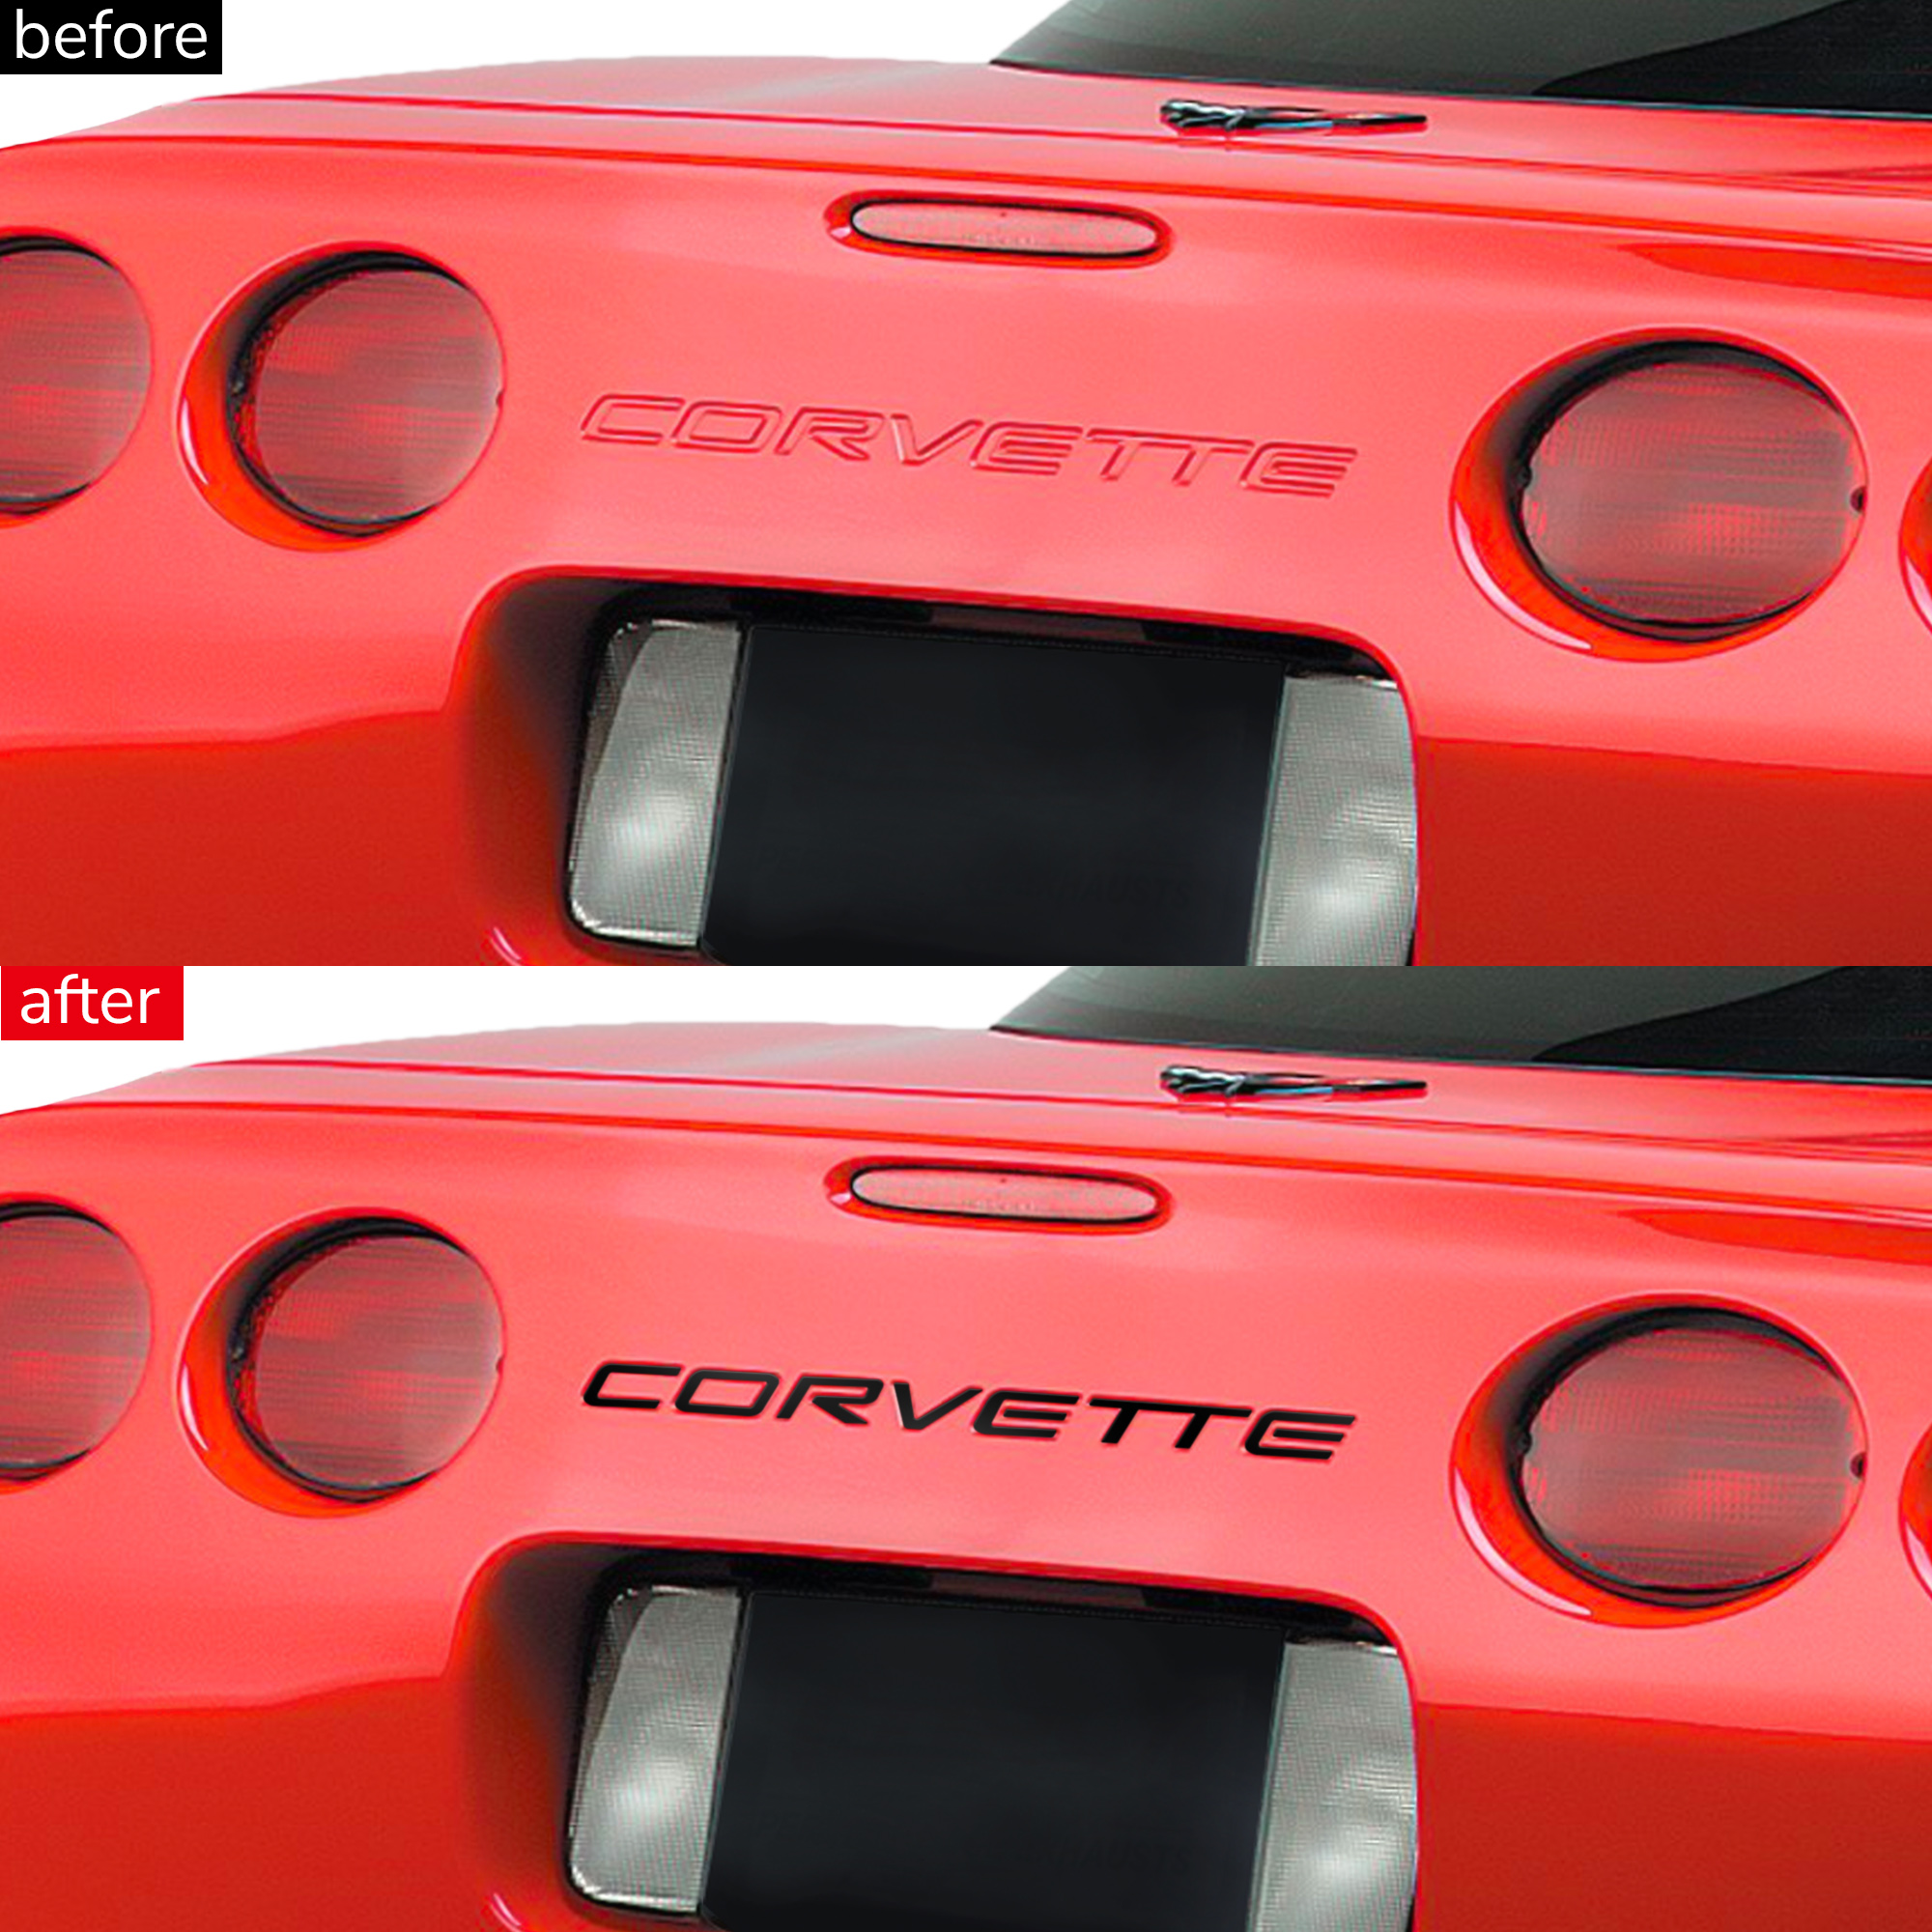 Black BDTrims Front and Rear Raised Letters Compatible with 1997-2004 Corvette C5 Models